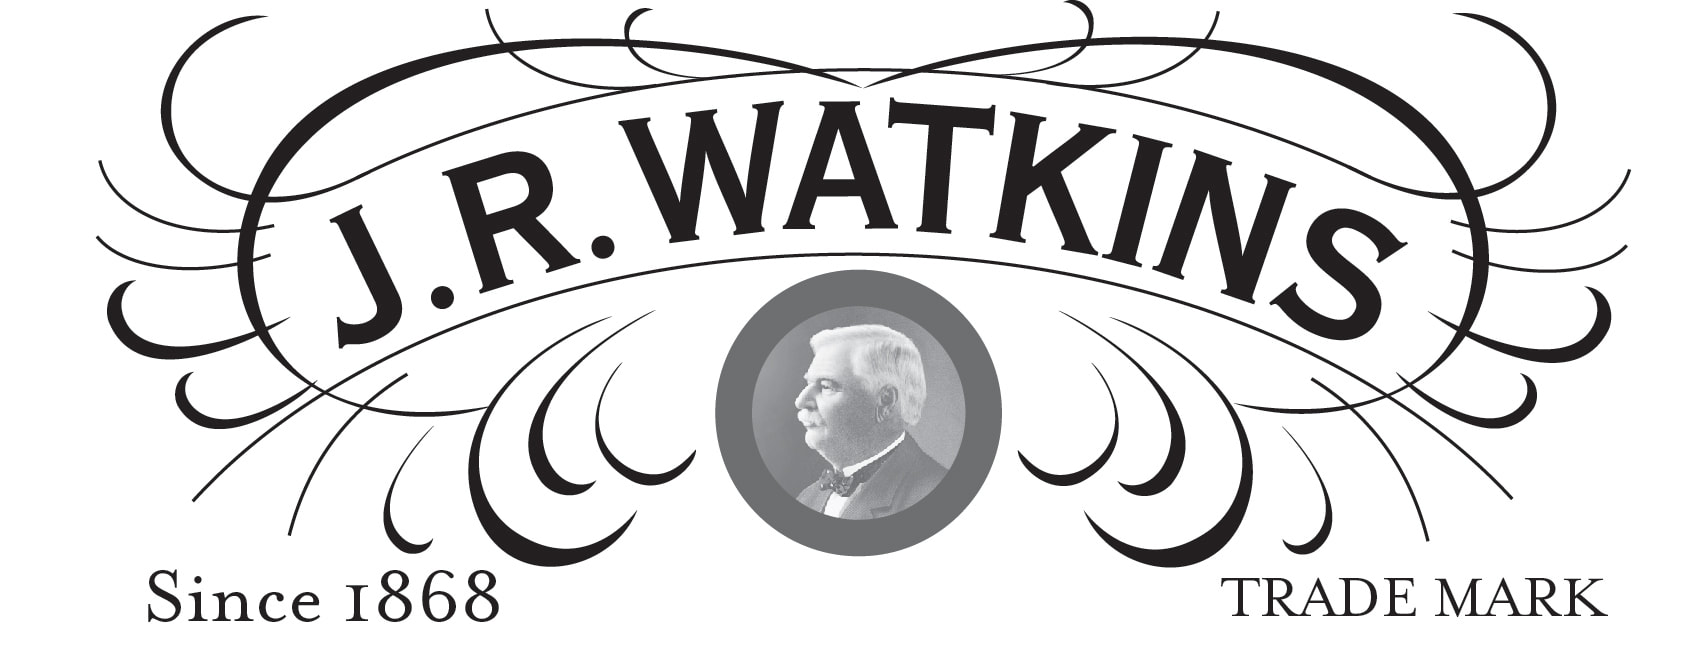 JR Watkins Products Wholesale Account Application